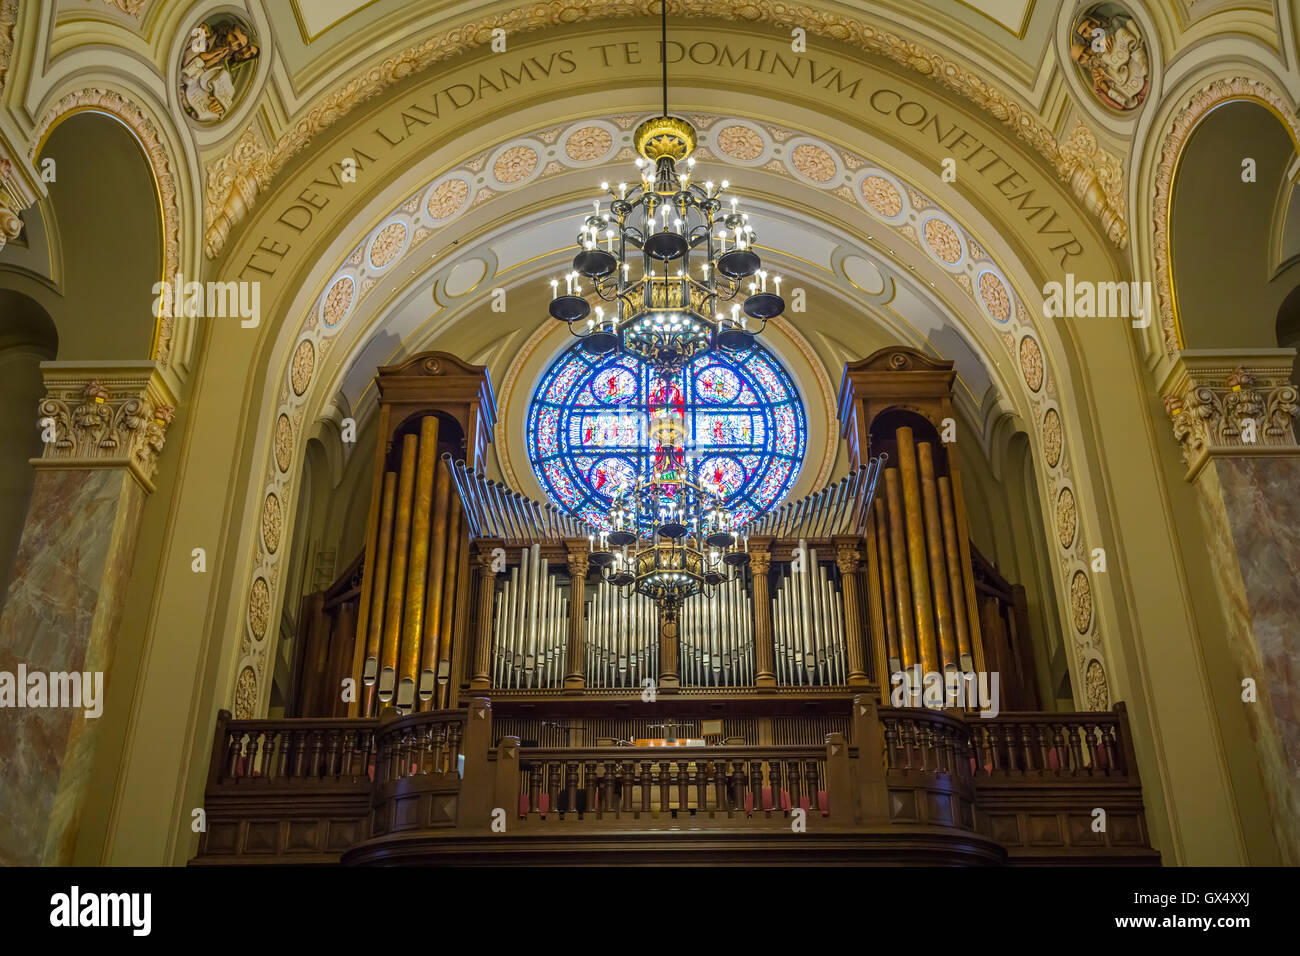 The Cathedral of St. Joseph Roman Catholic church organ in Sioux Falls, South Dakota, USA. Stock Photo